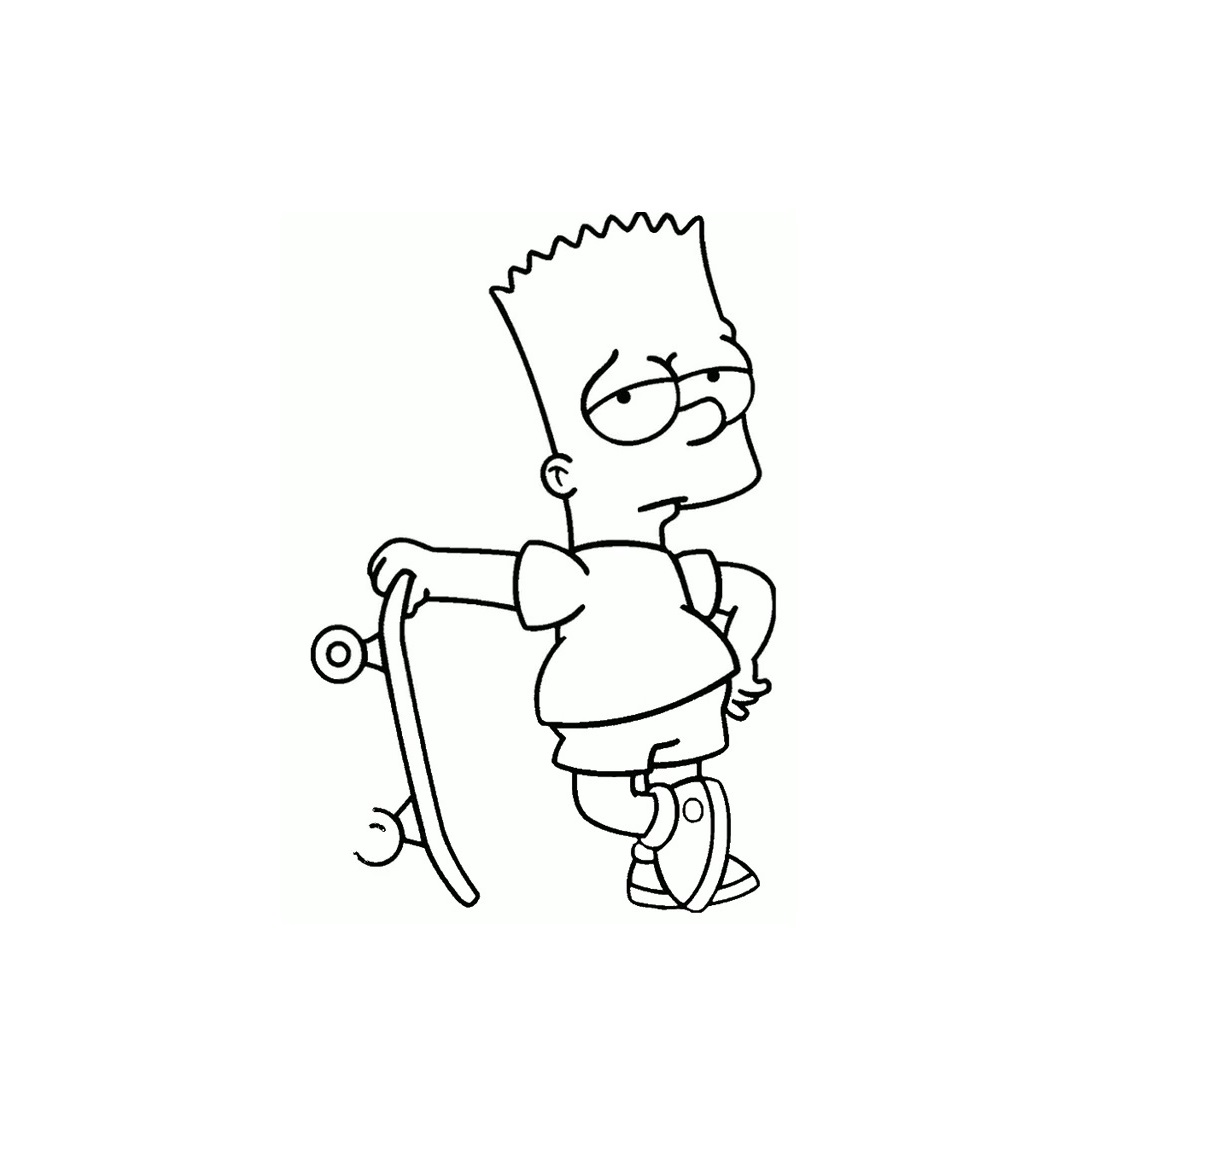 Барт симпсон рисунок для срисовки